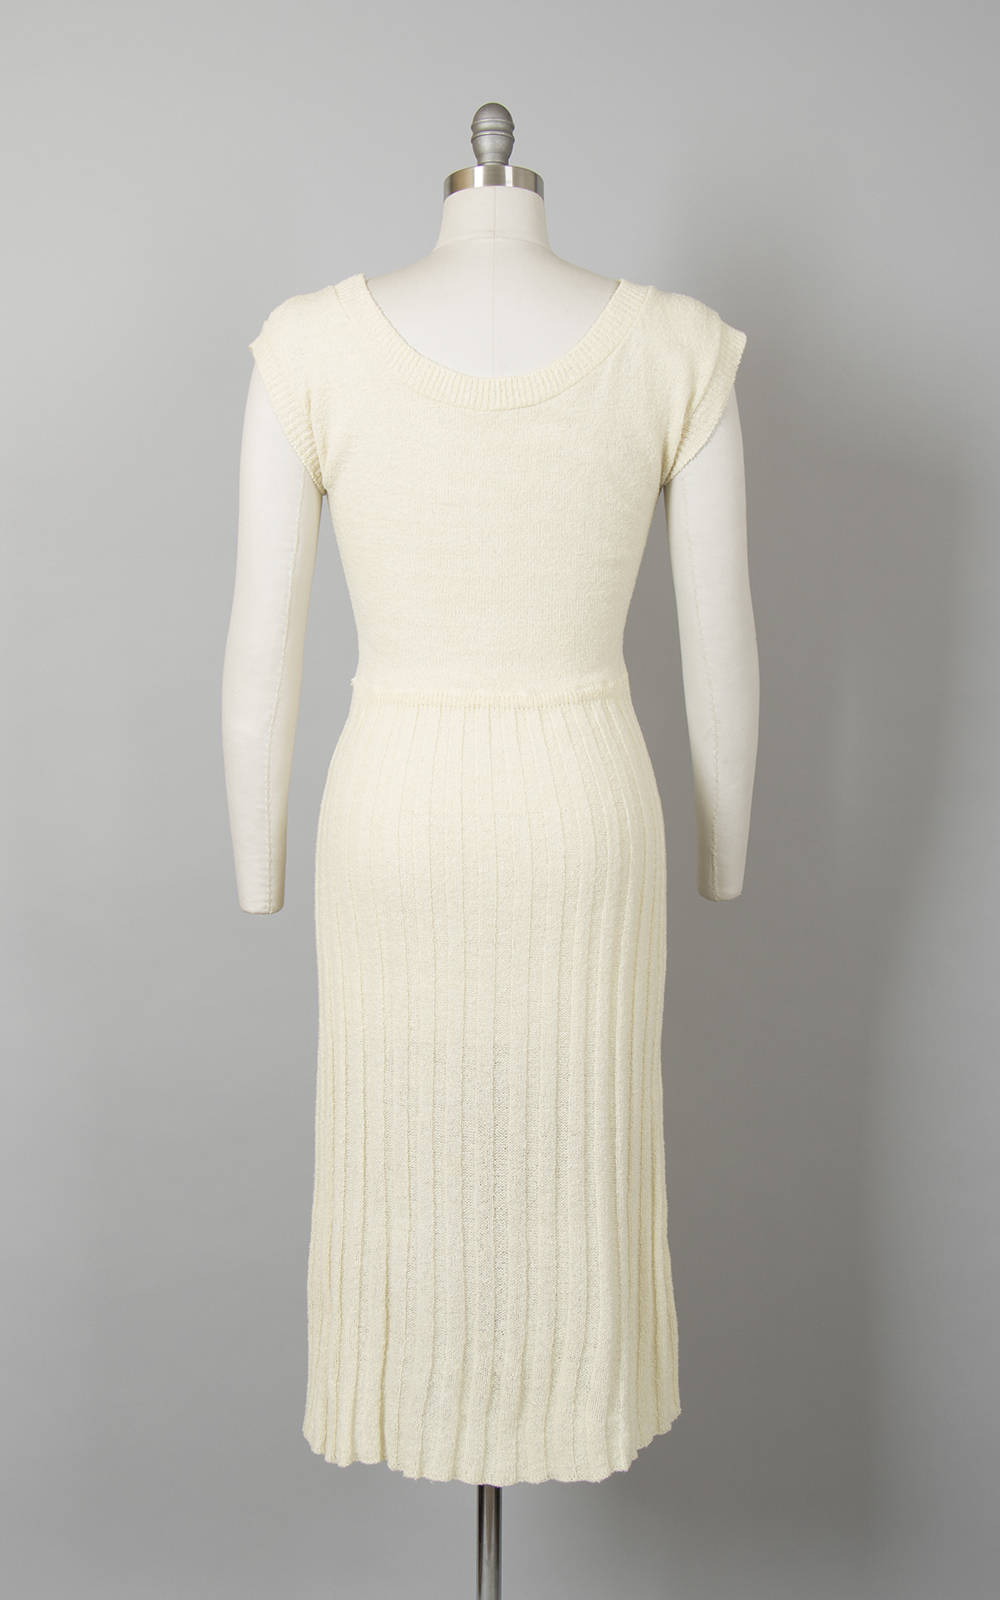 Vintage 1950s Dress | 50s Knit Wiggle Dress Soutache Beaded Rhinestone Cream Sweater Dress (small/medium)